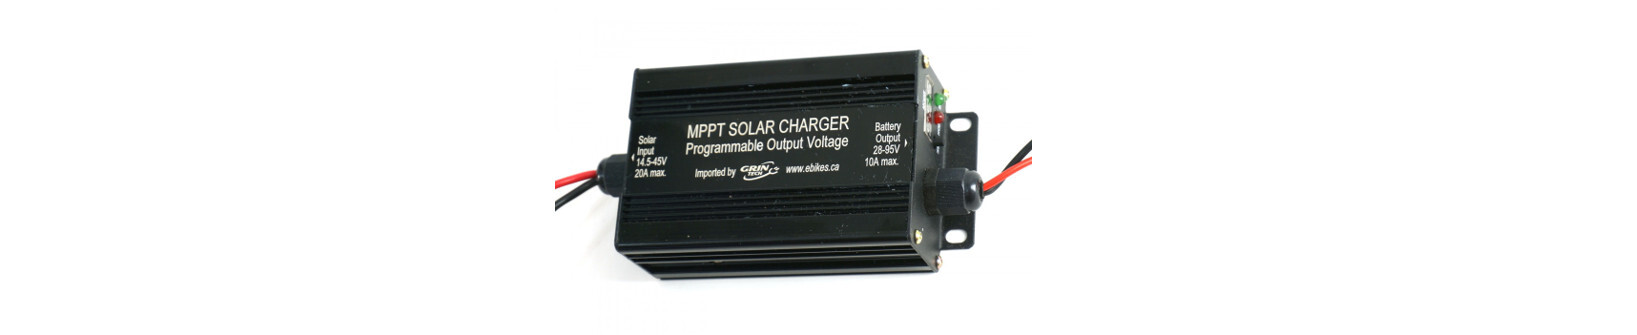 MPPT Solar Charger